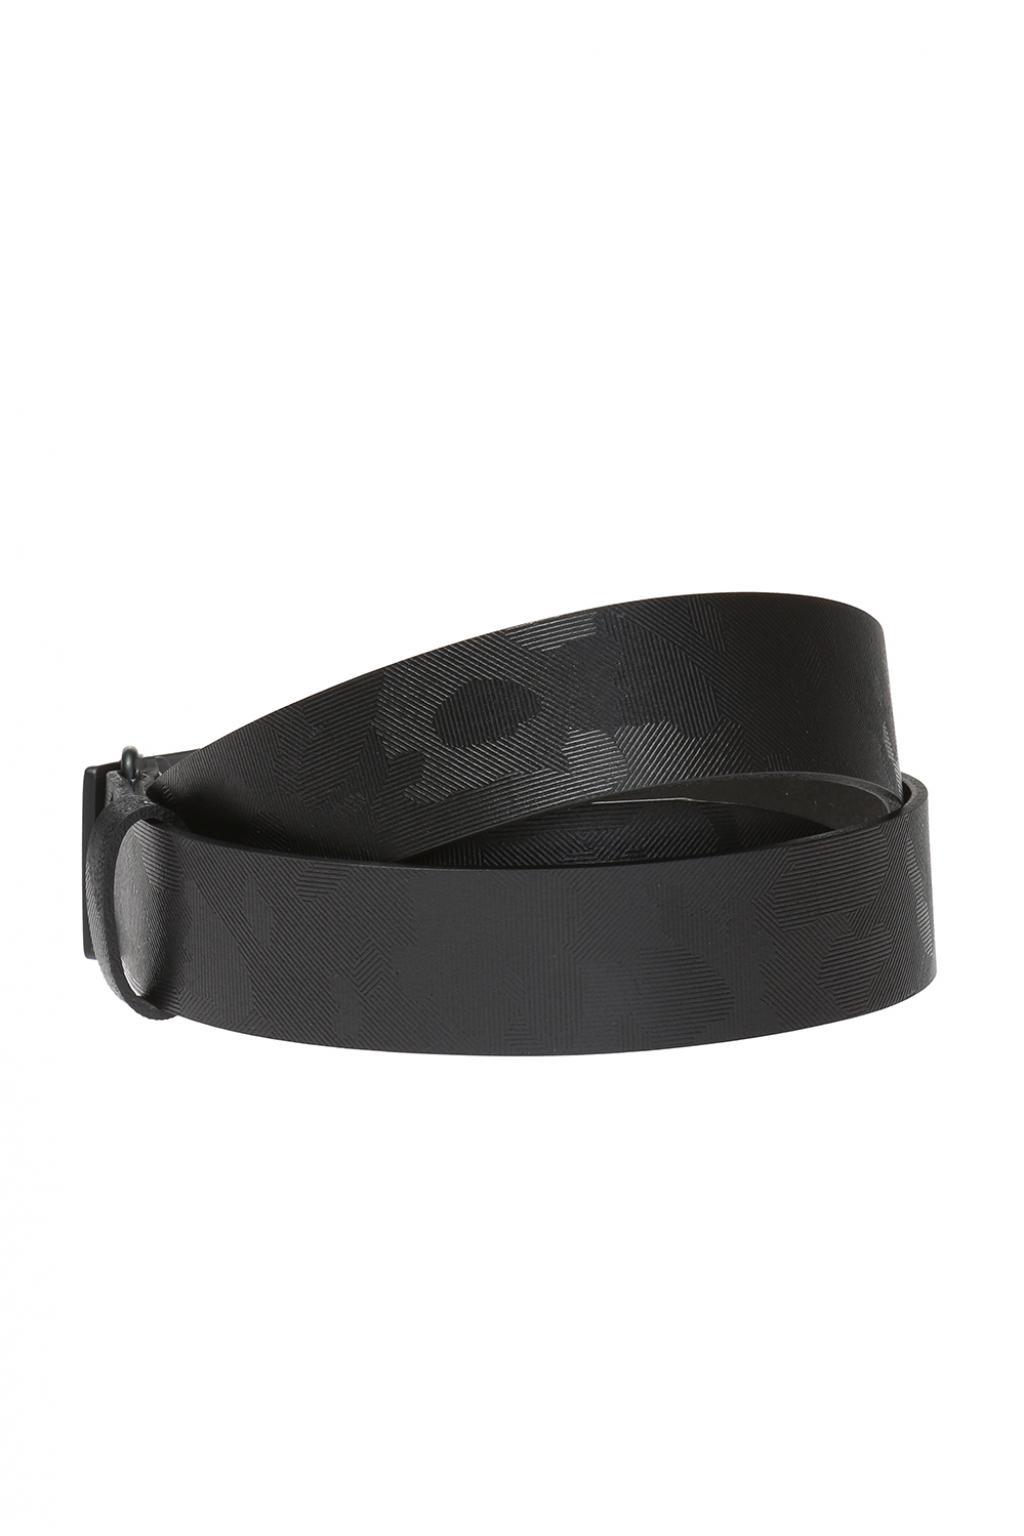 DIESEL Buckle Belt in Black for Men - Lyst